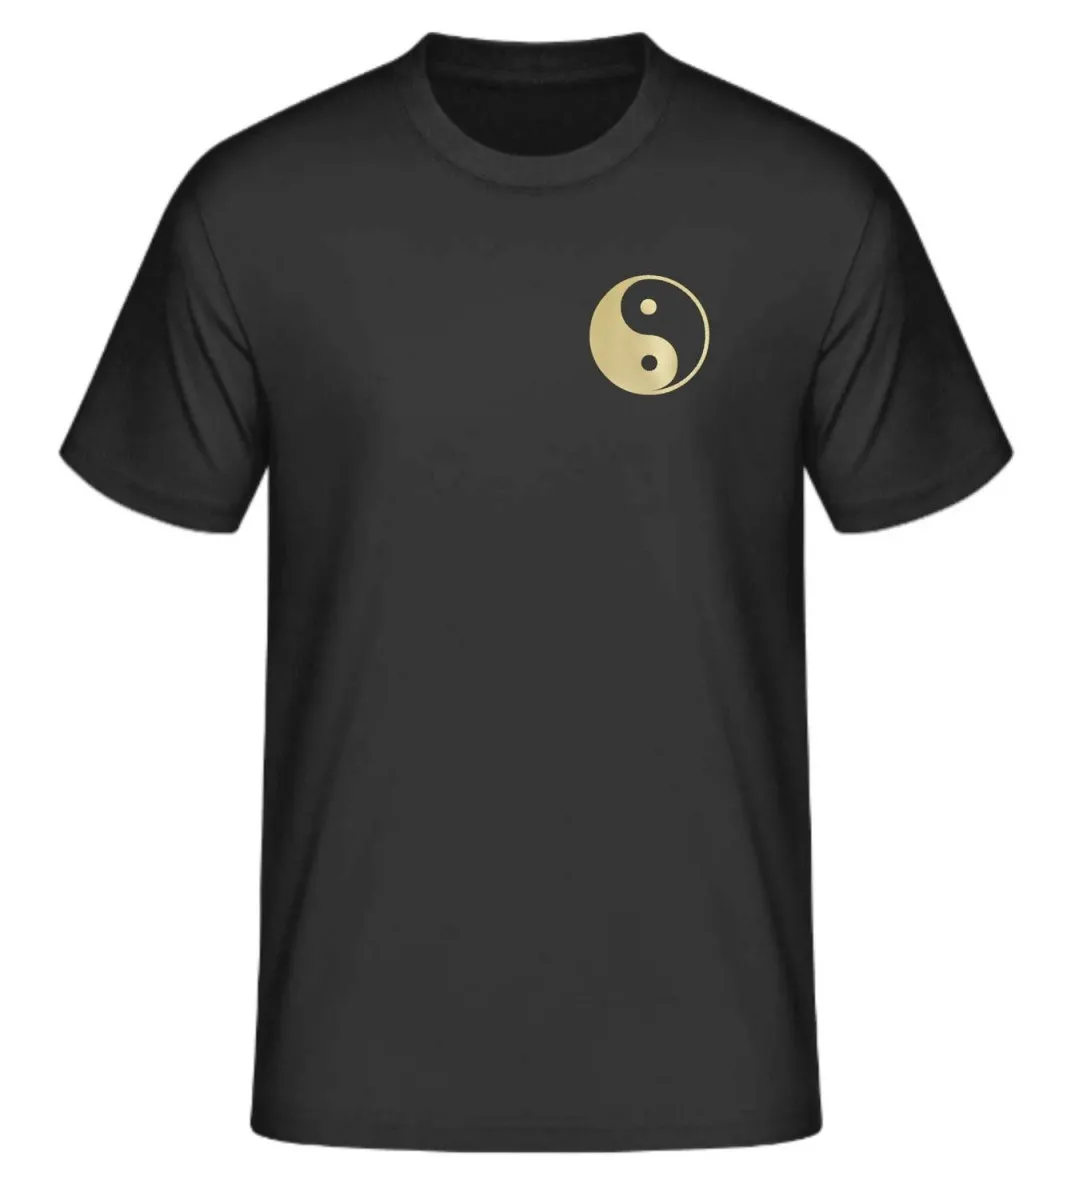 T-shirt Ying Yang - Tai Chi chest logo gold